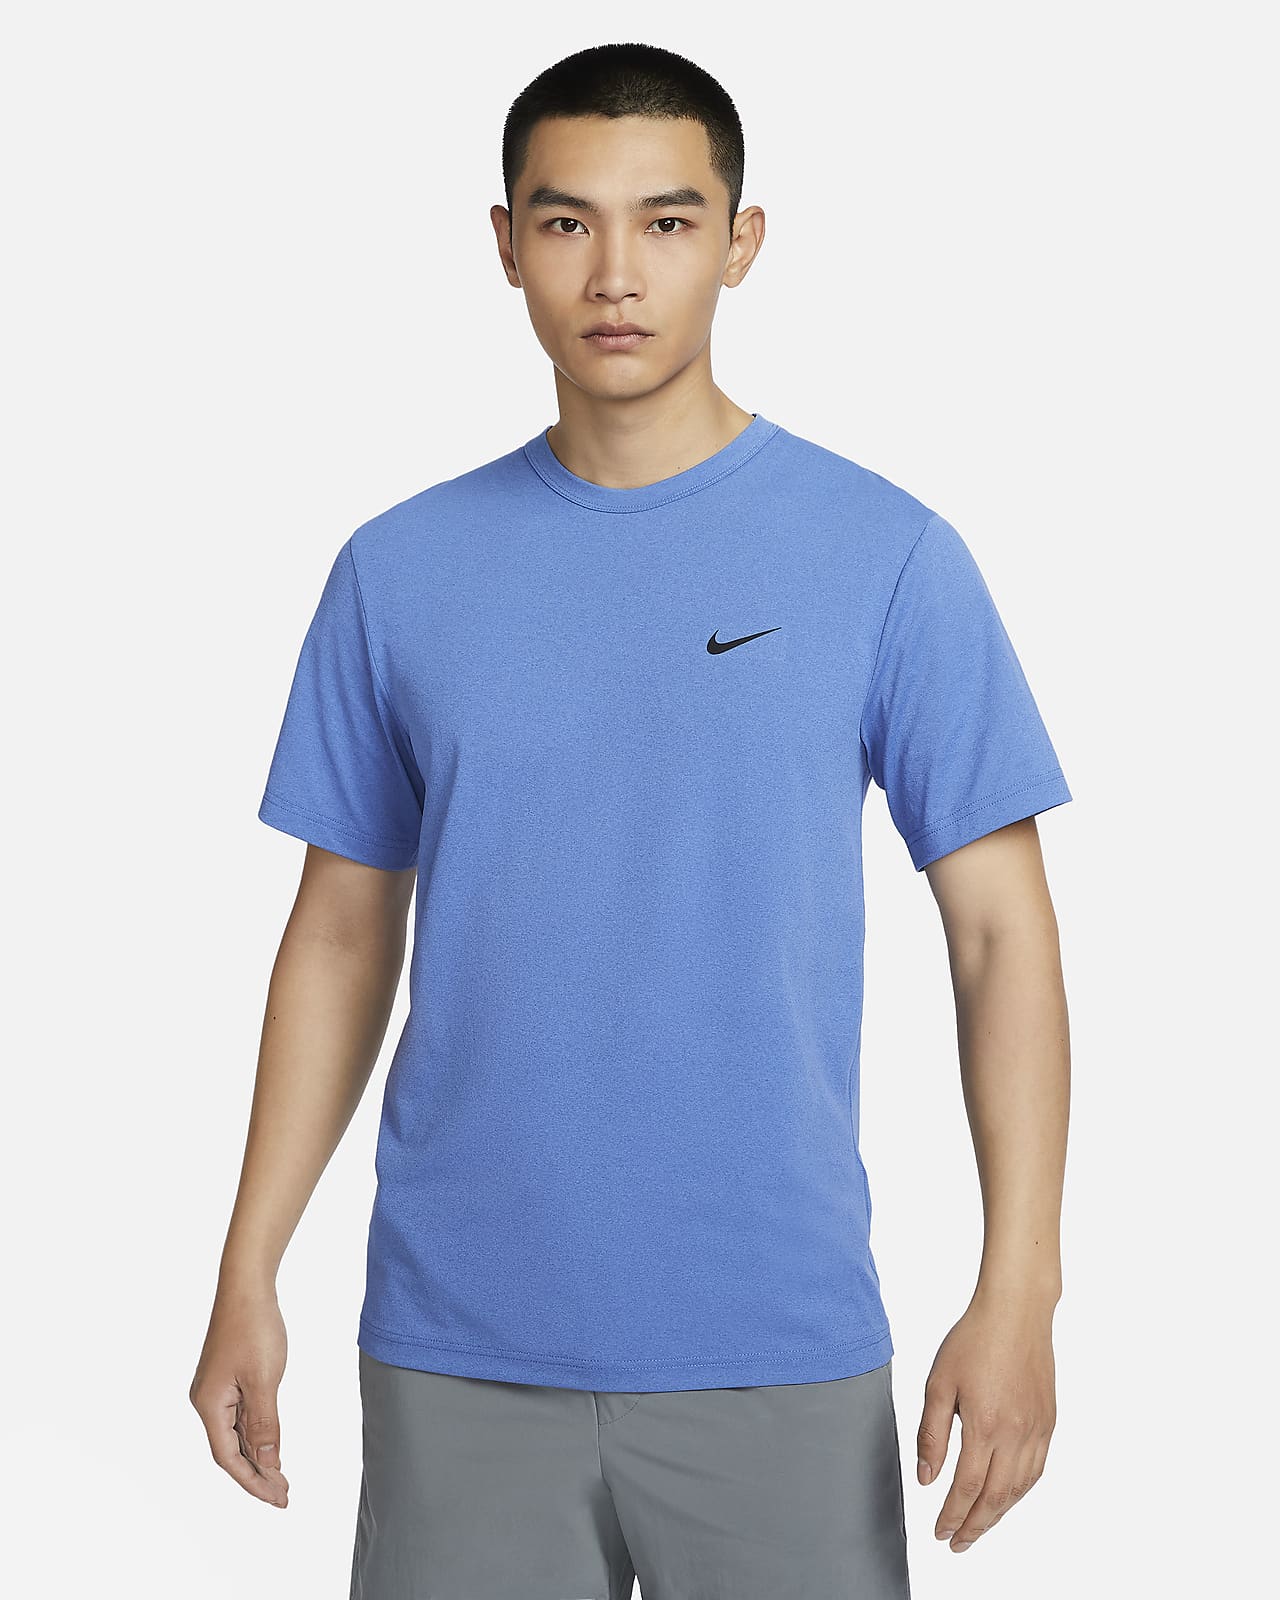 Nike Yoga Dri Fit Men's Training Shirt Hoodie Short Sleeve